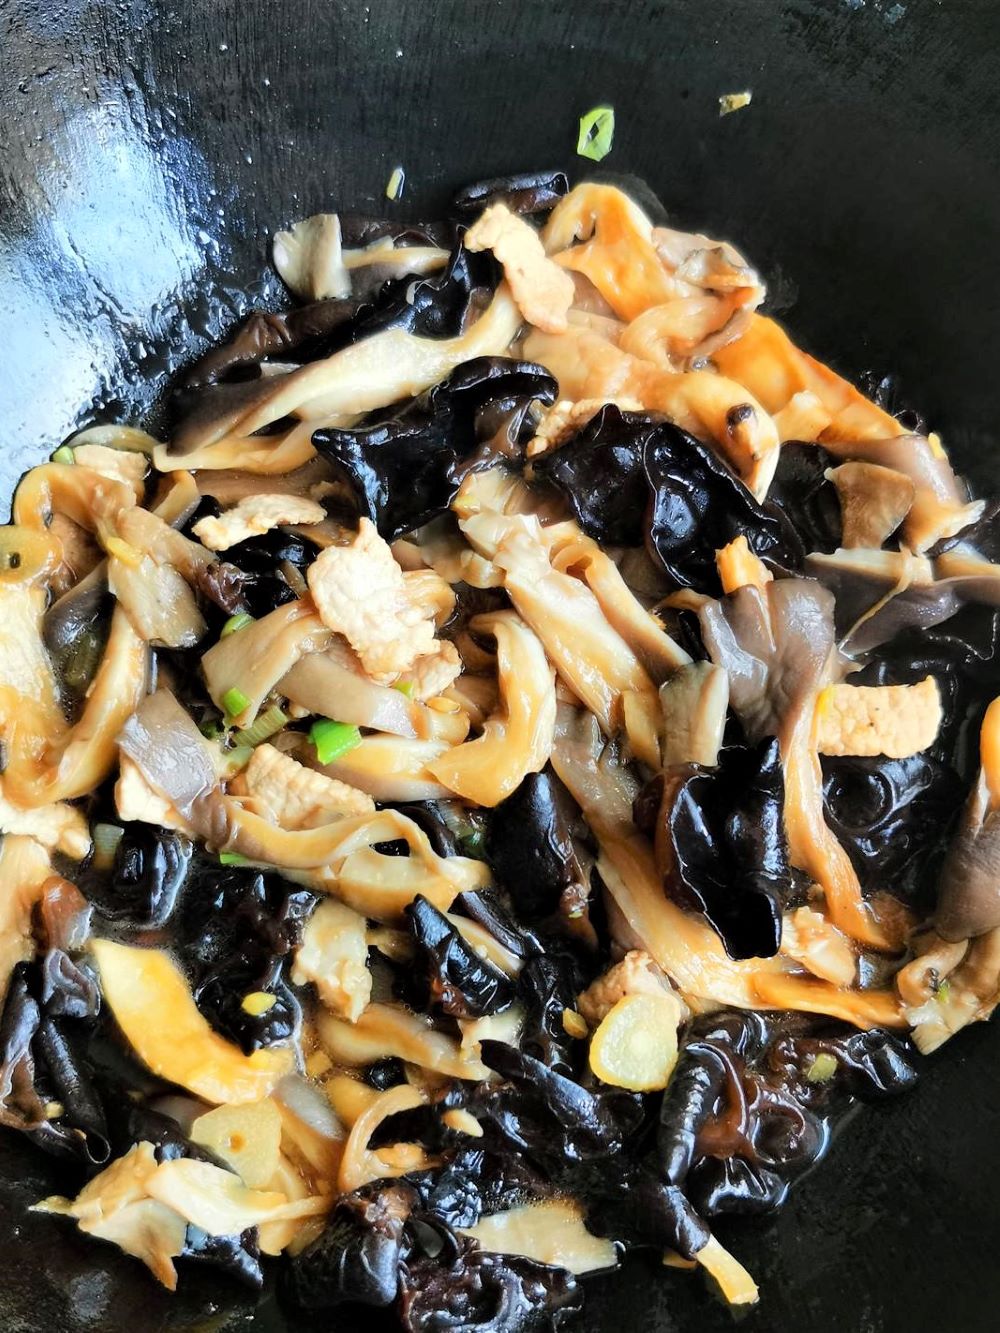 Mushrooms, black fungus and cucumber stir-fry with pork 05